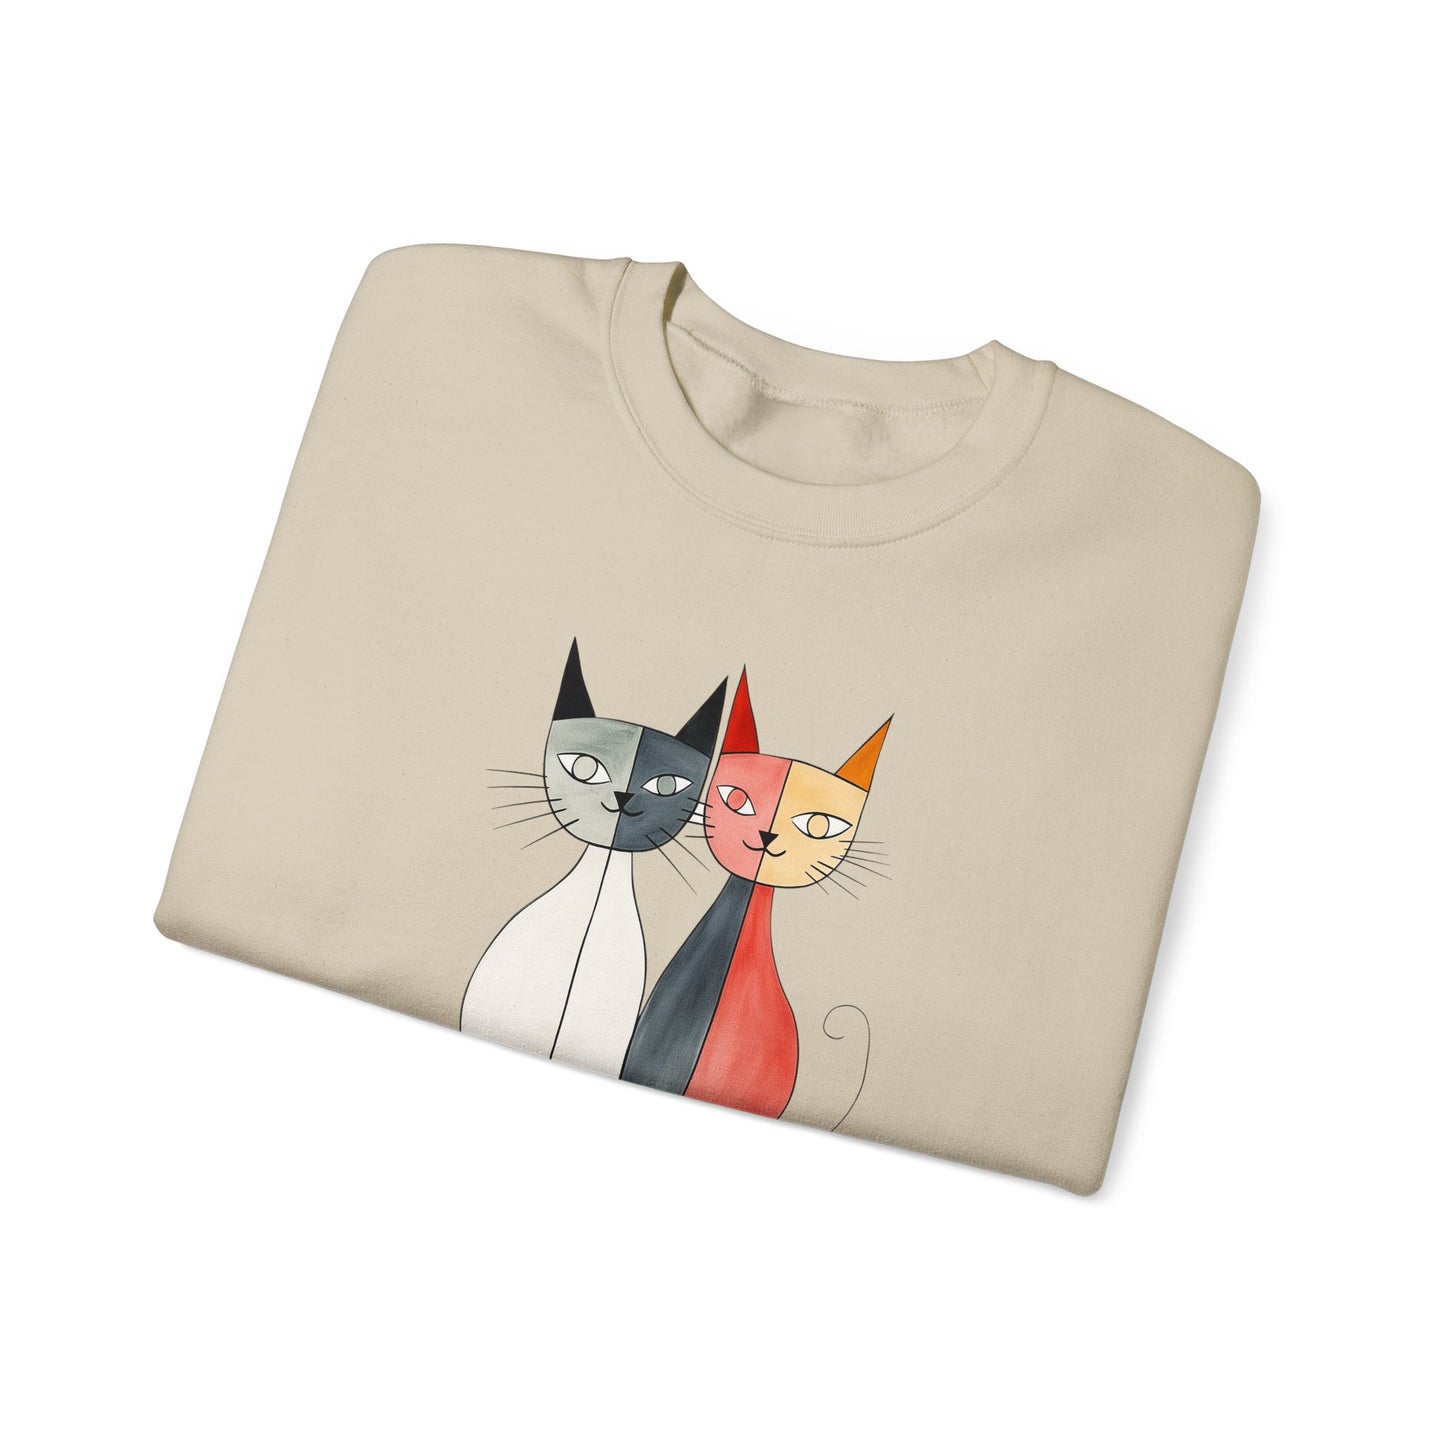 Atomic Cat Sweatshirt, Mid Century Modern Cat Style Design, Atomic Cat Shirt